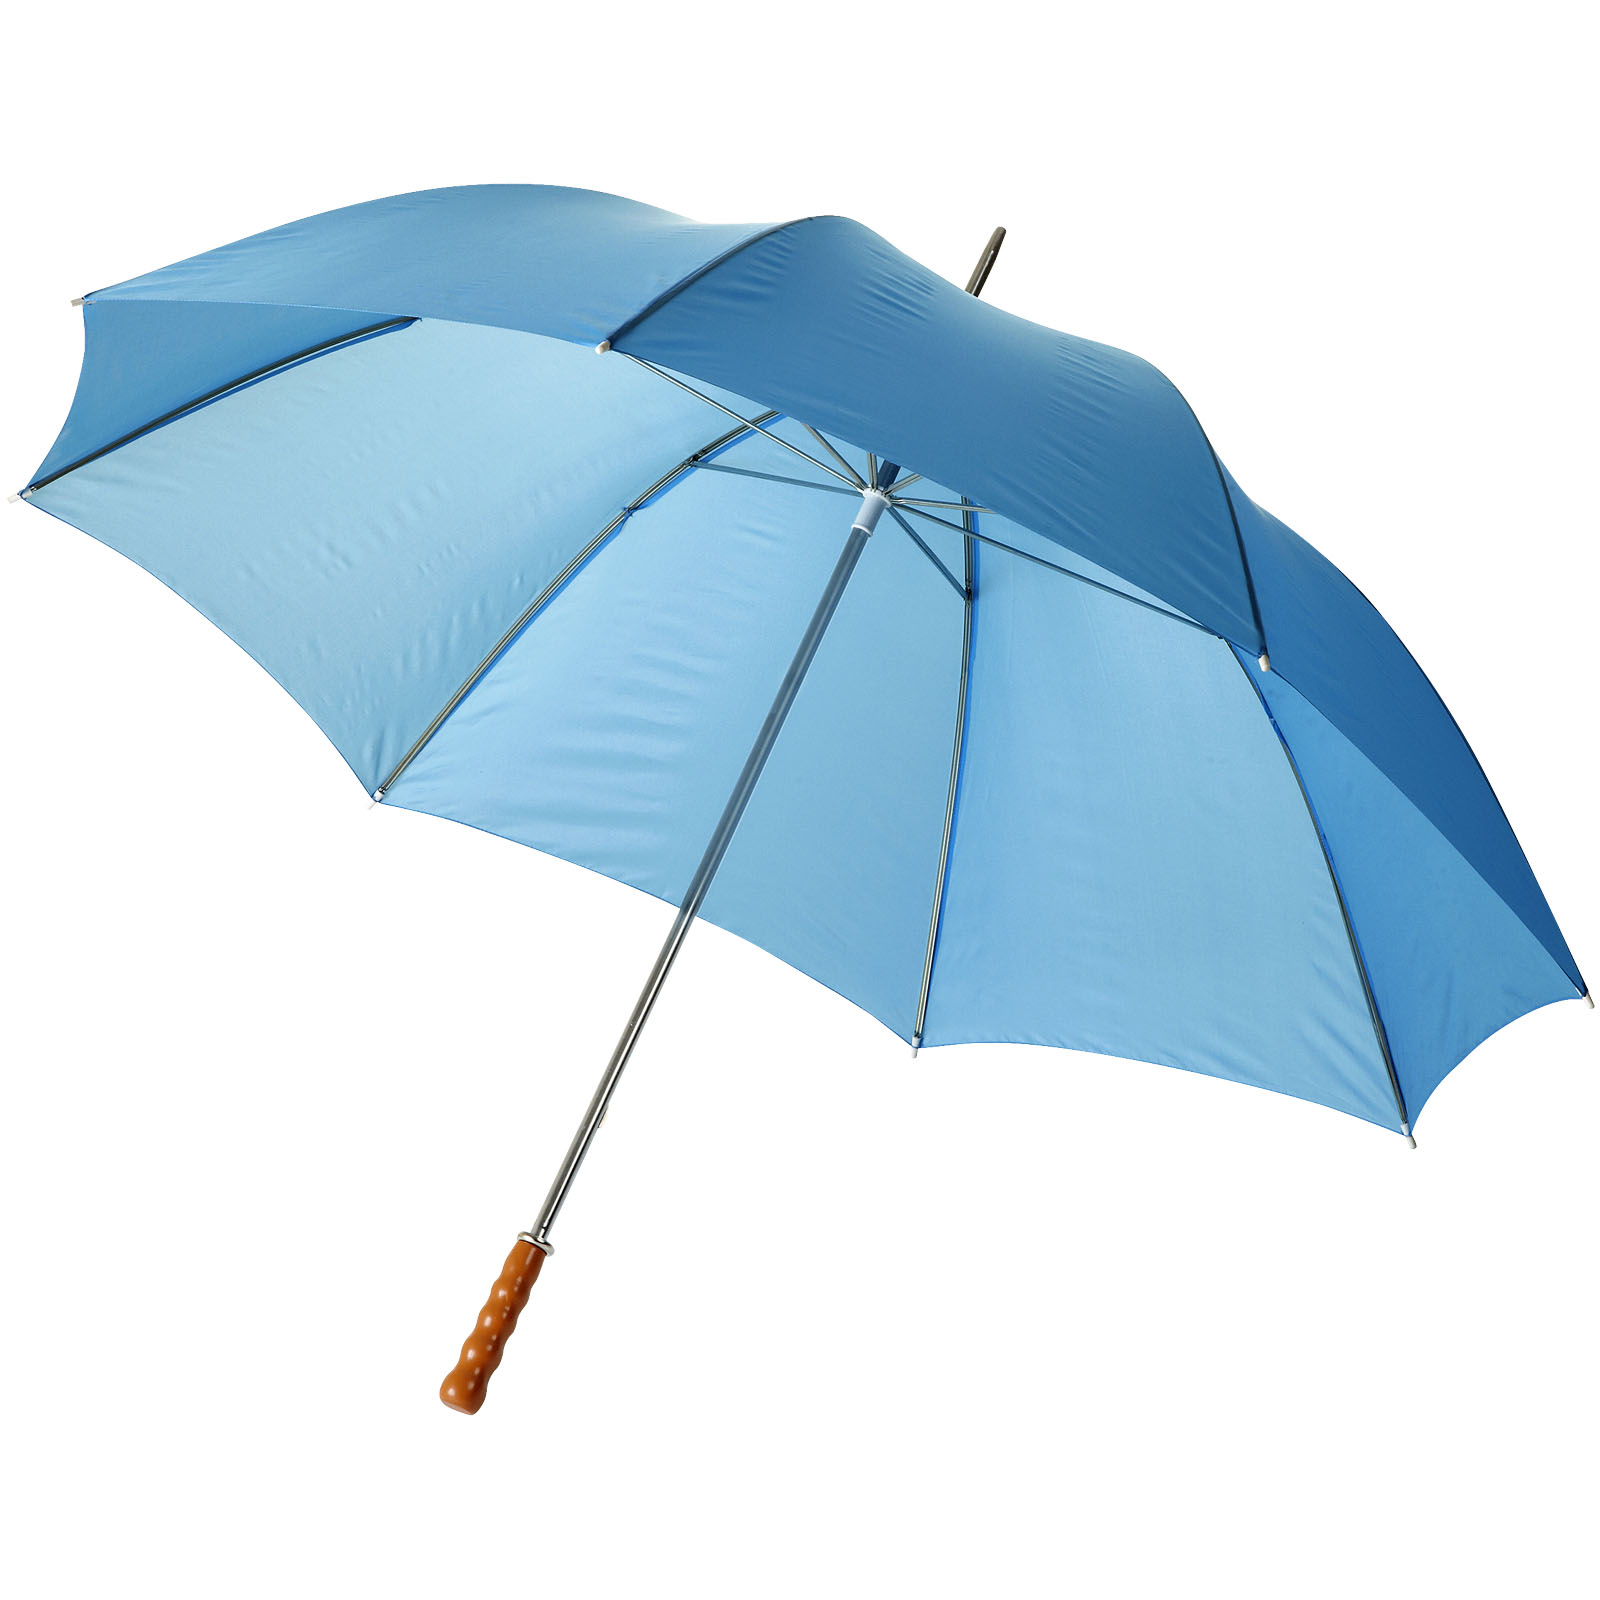 Paraguas de Golf - Piddlehinton - Torremolinos